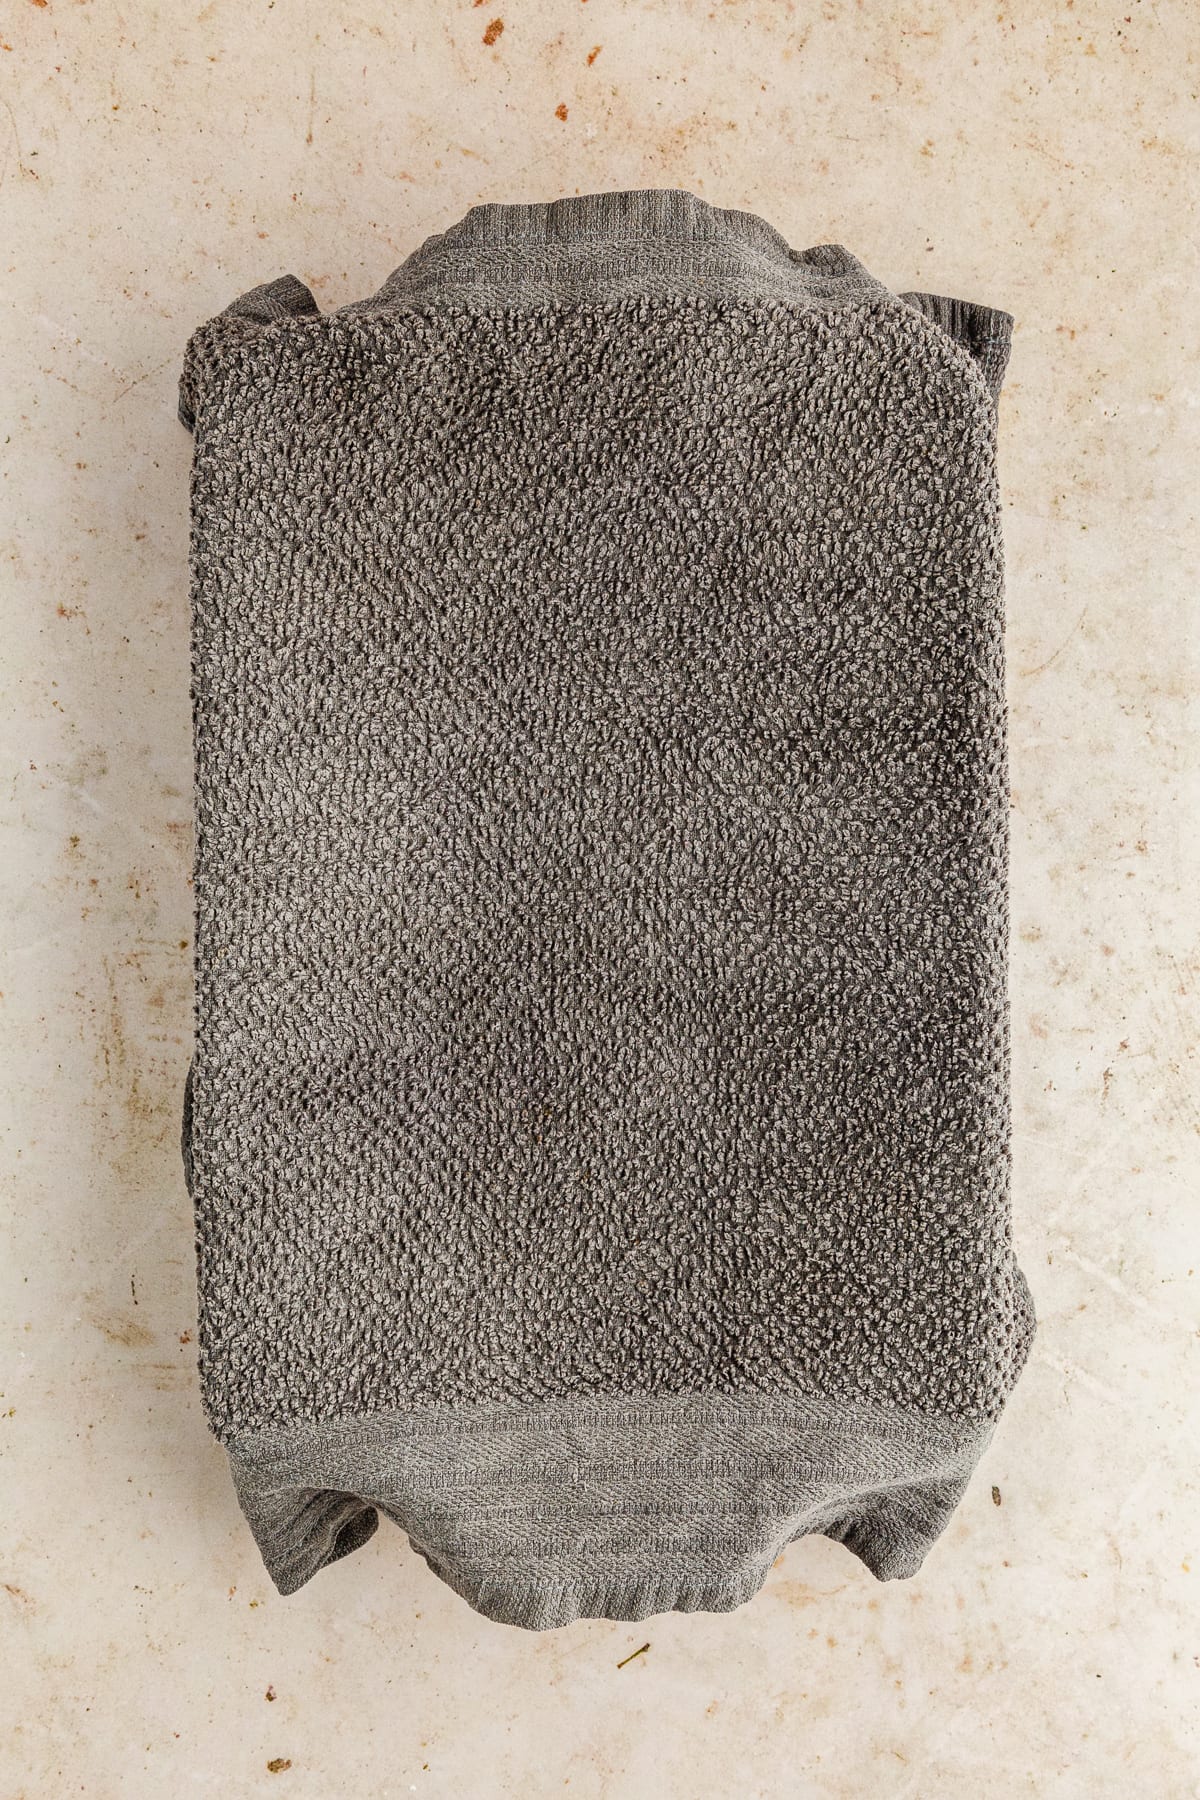 dough rising under a damp gray cloth in a baking dish.